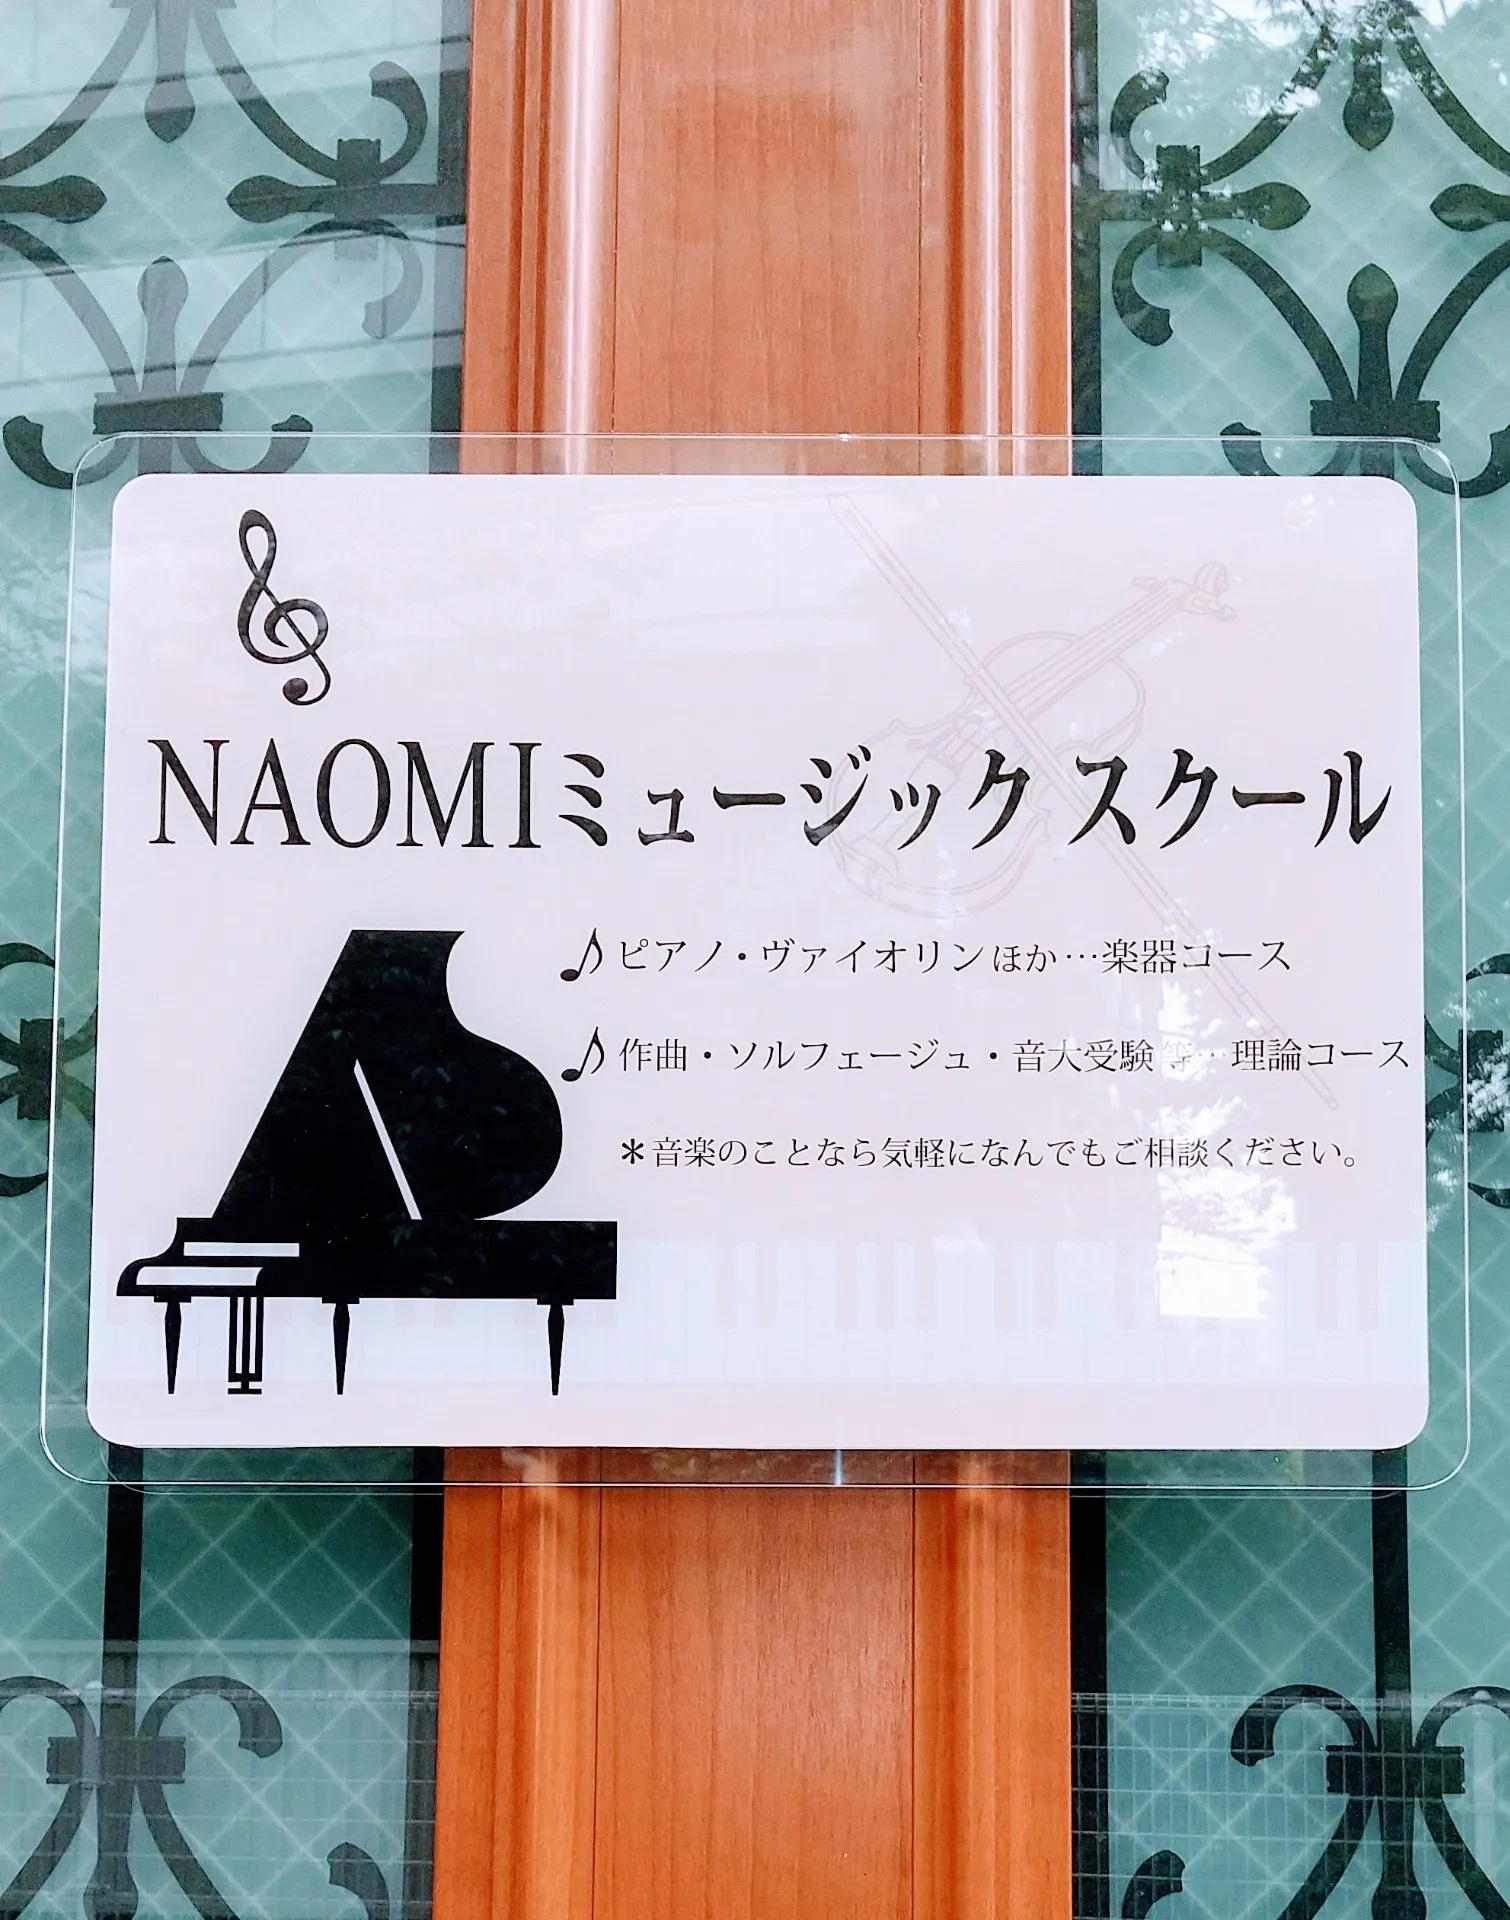 NAOMIミュージックスクール